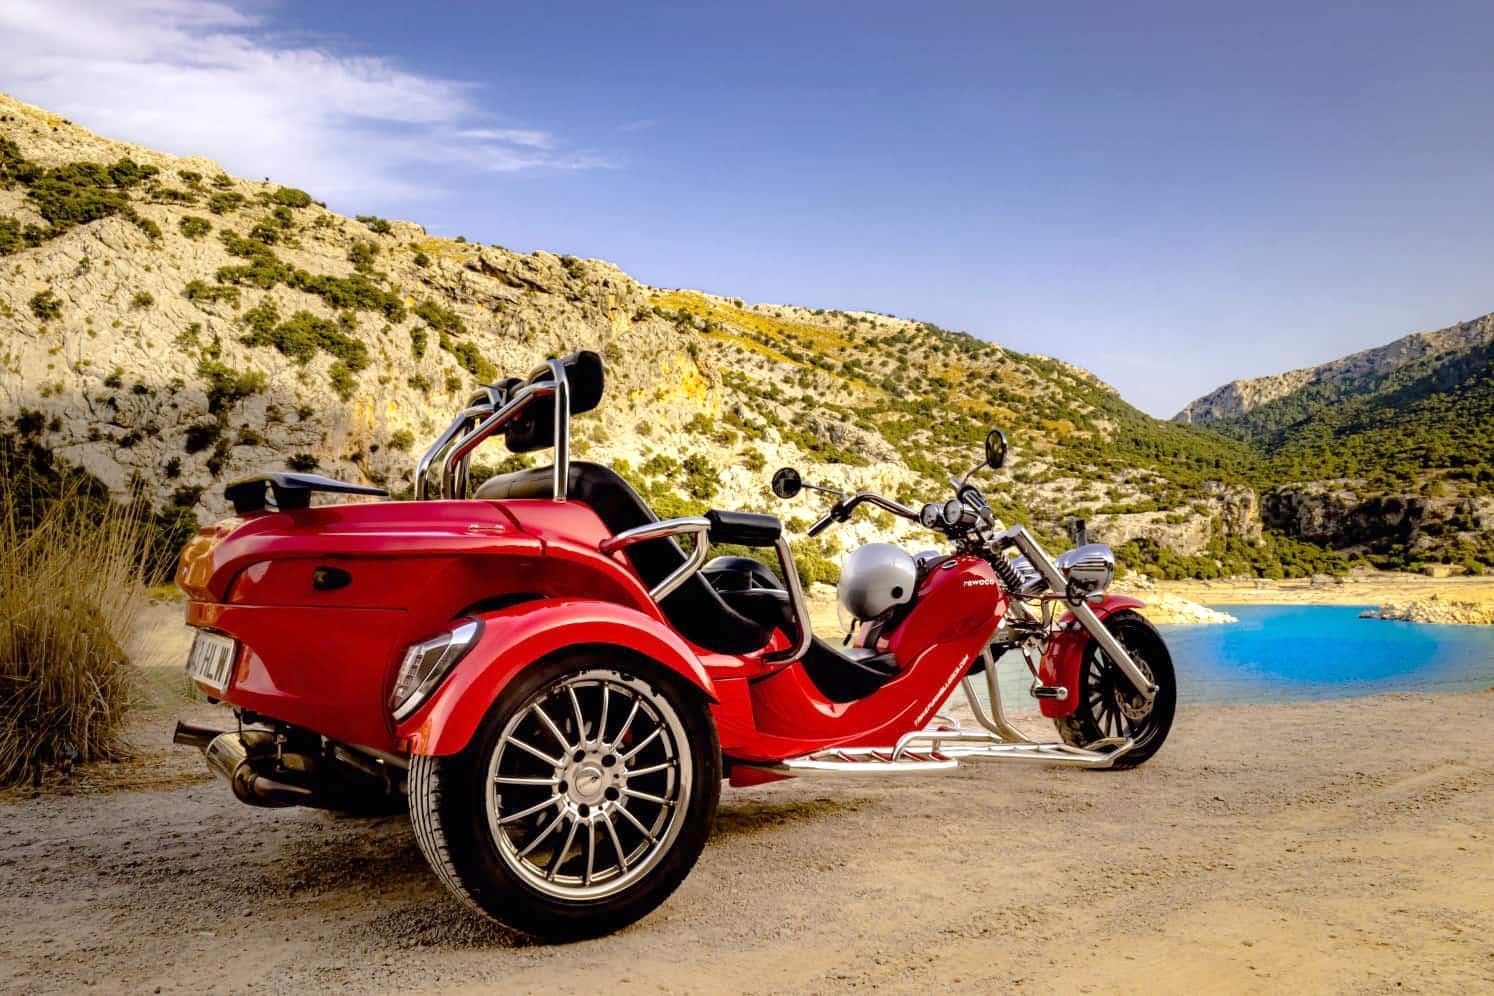 Tramuntana Mountains & Palma Motor Trike Tour